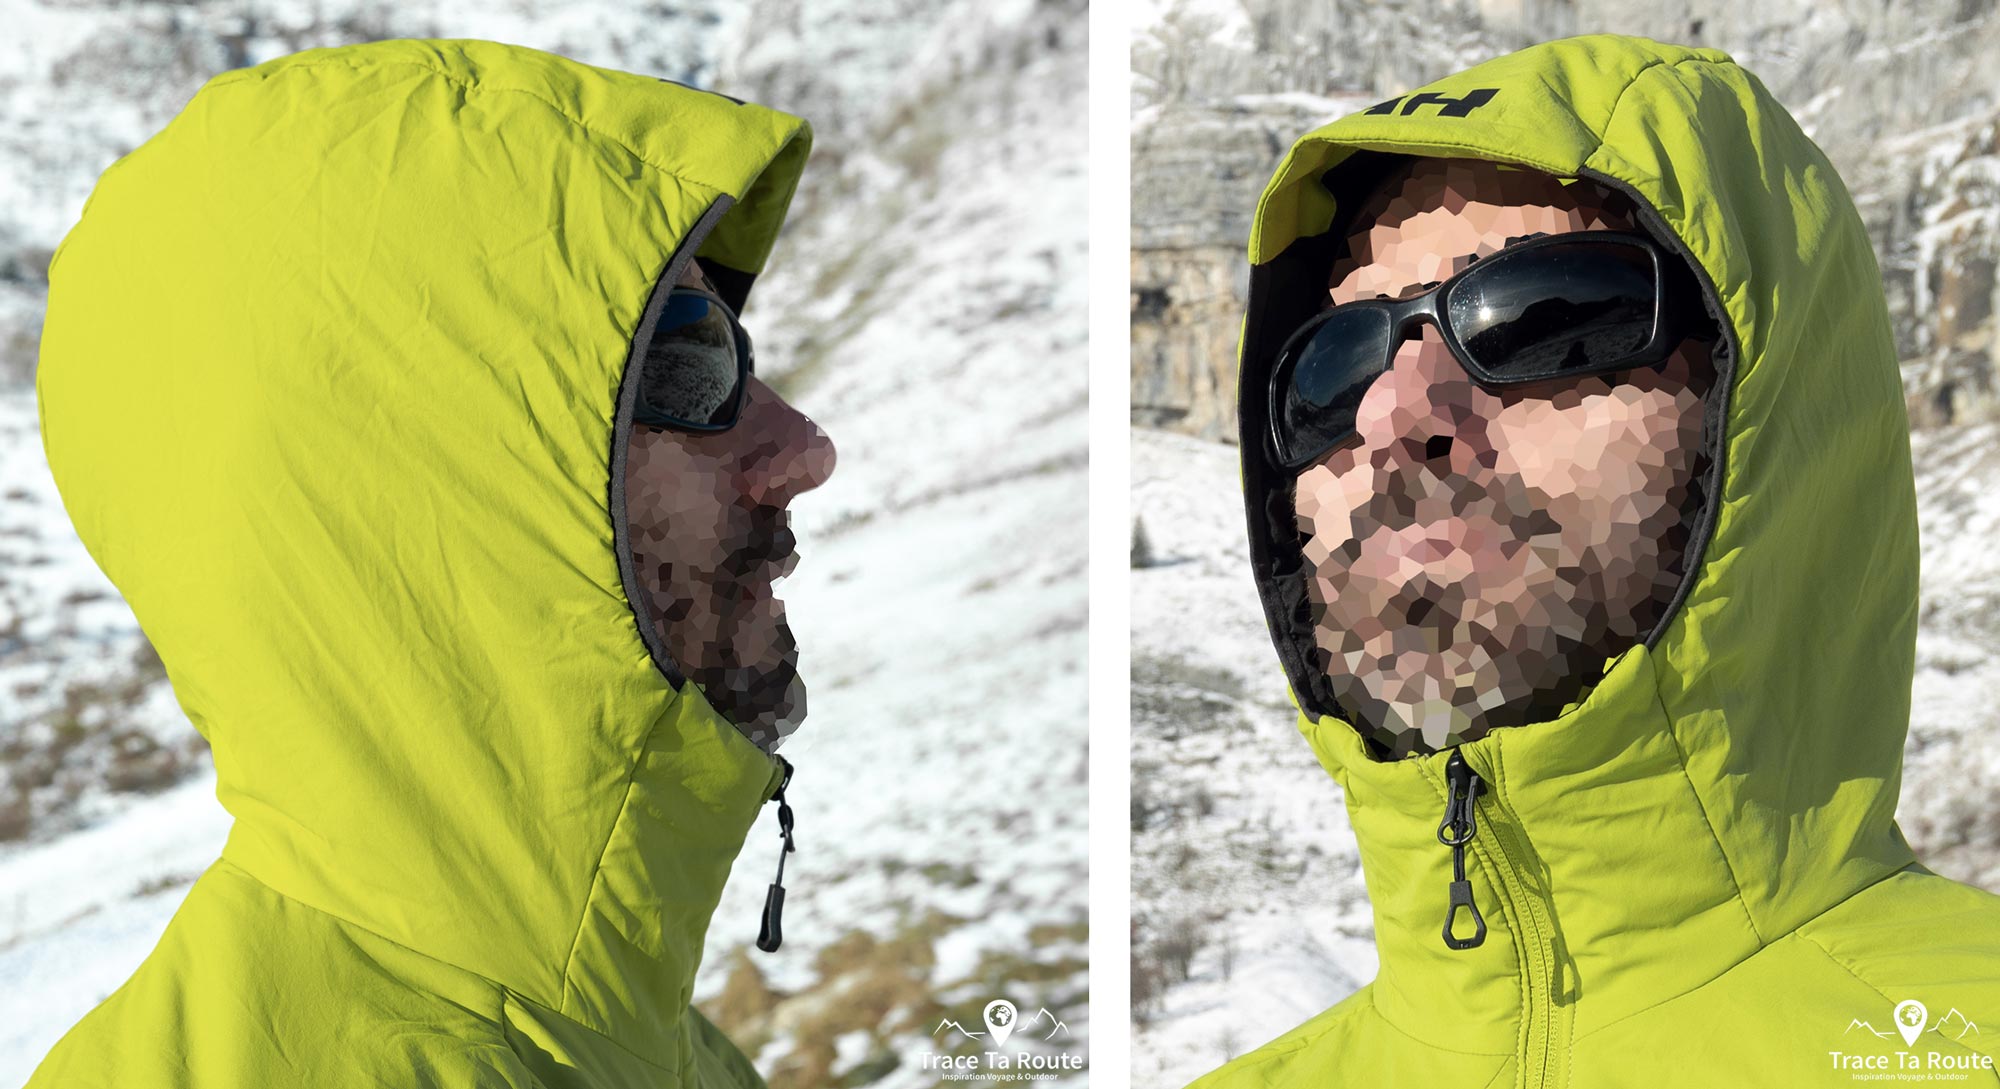 Test doudoune Helly Hansen Odin Stretch Hood Insulator 2.0 Review outdoor hoodie clothe mountaineering hiking winter mountain snow ski touring - Capuche Vêtement veste hiver ski de randonnée alpinisme montagne hiver neige